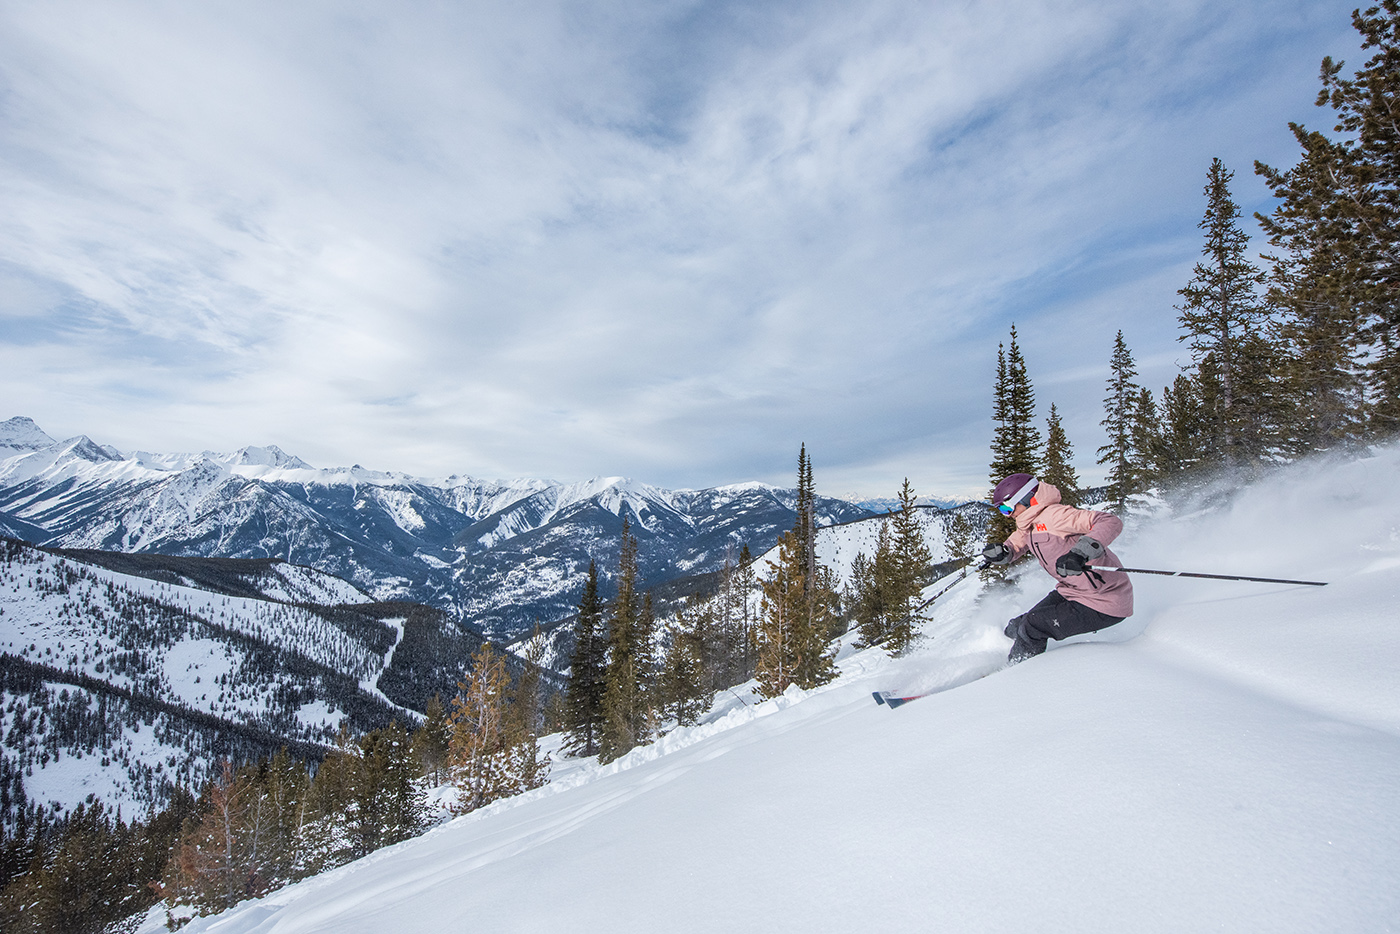 pro skier cliff jump, extreme skiing, winter mountain panorama